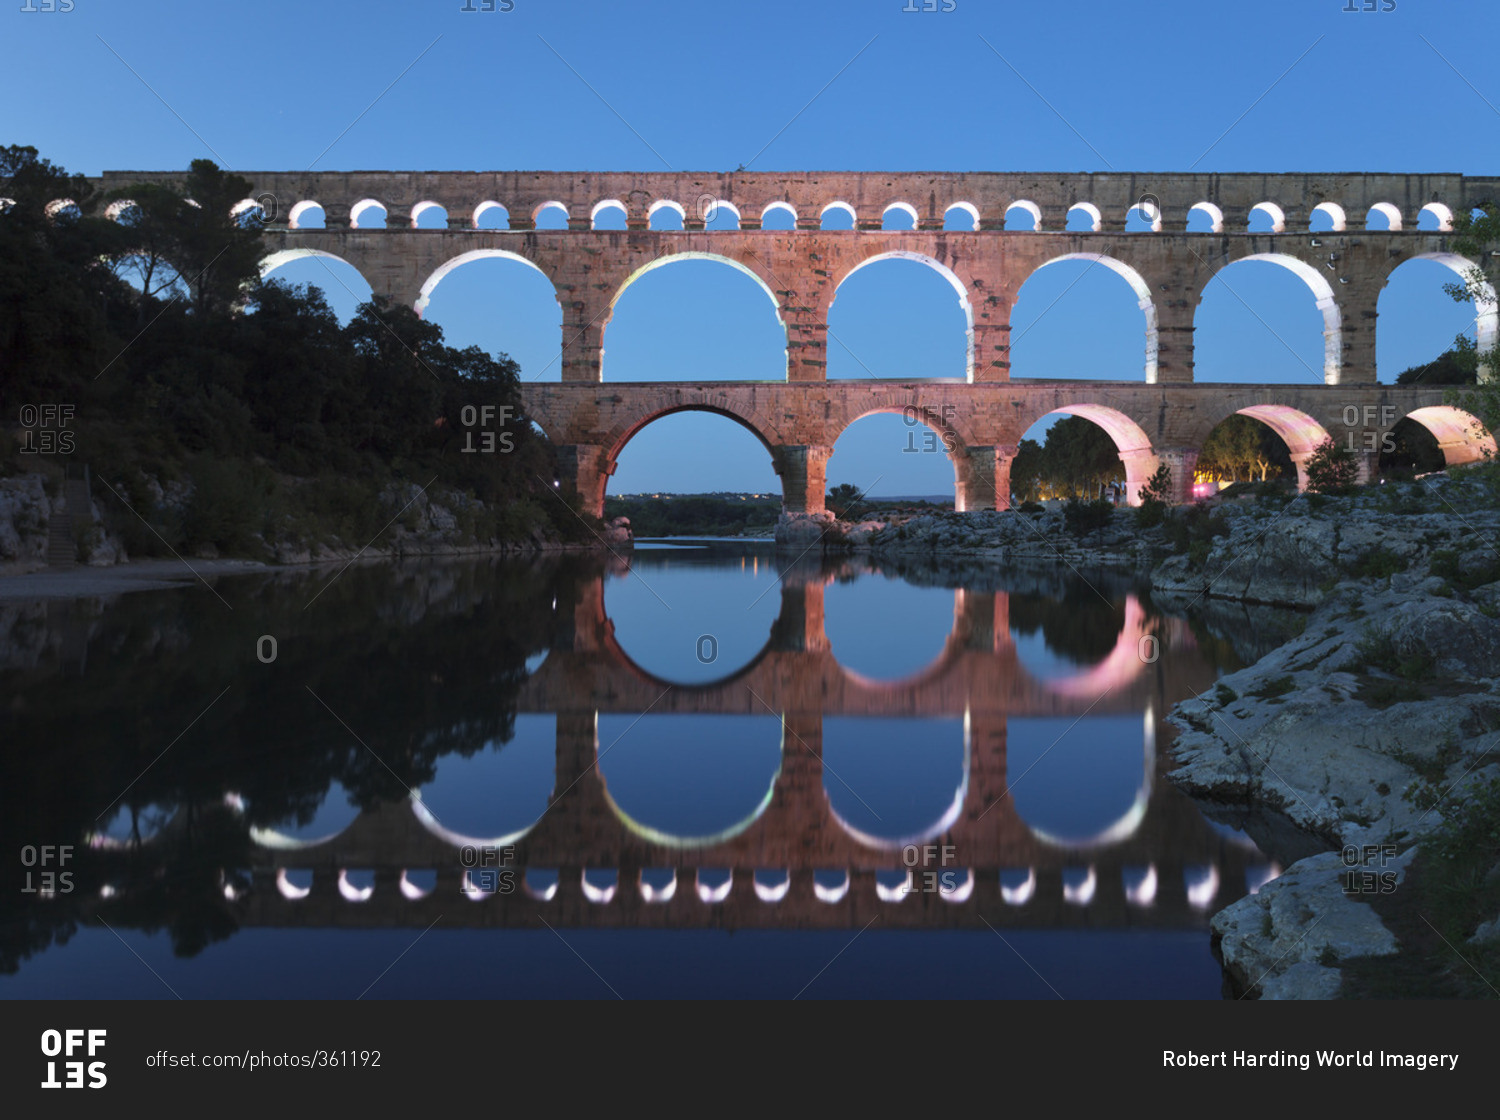 Pont du Gard, Roman aqueduct, UNESCO World Heritage, River Gardon, Languedoc-Roussillon, southern France, France